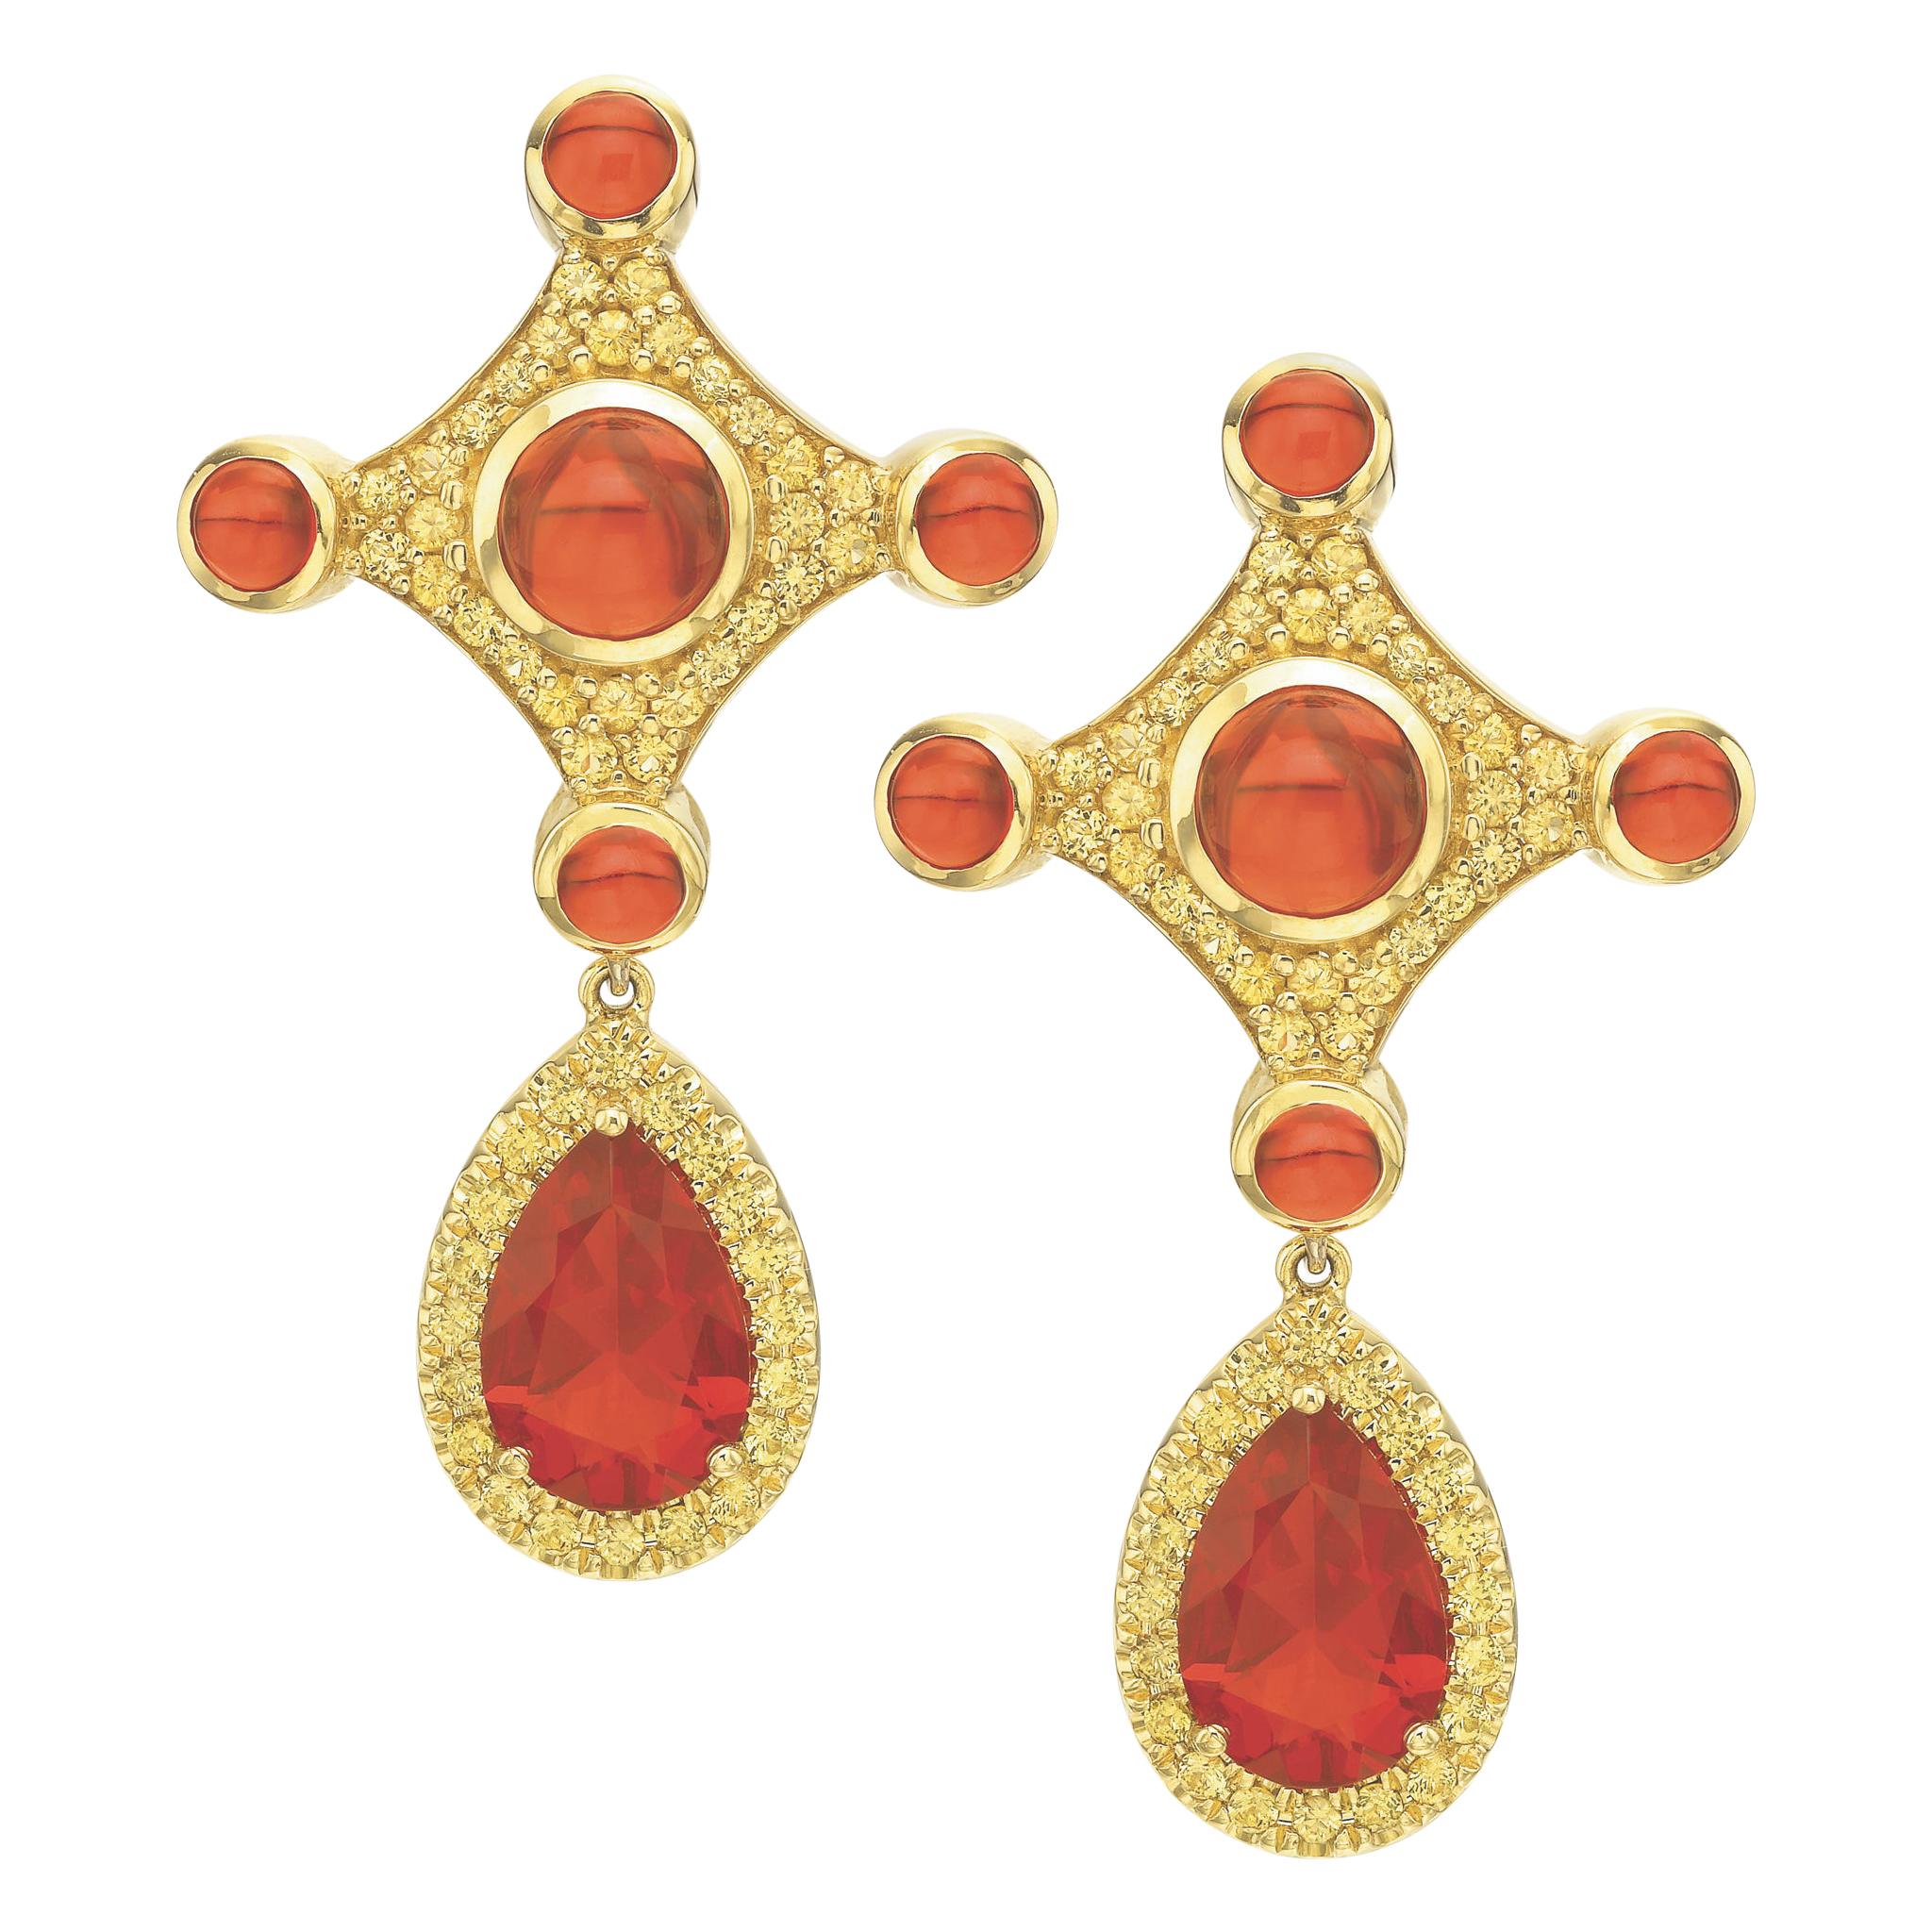 Fire Opal and Yellow Sapphire Earrings in 18 Karat Yellow Gold